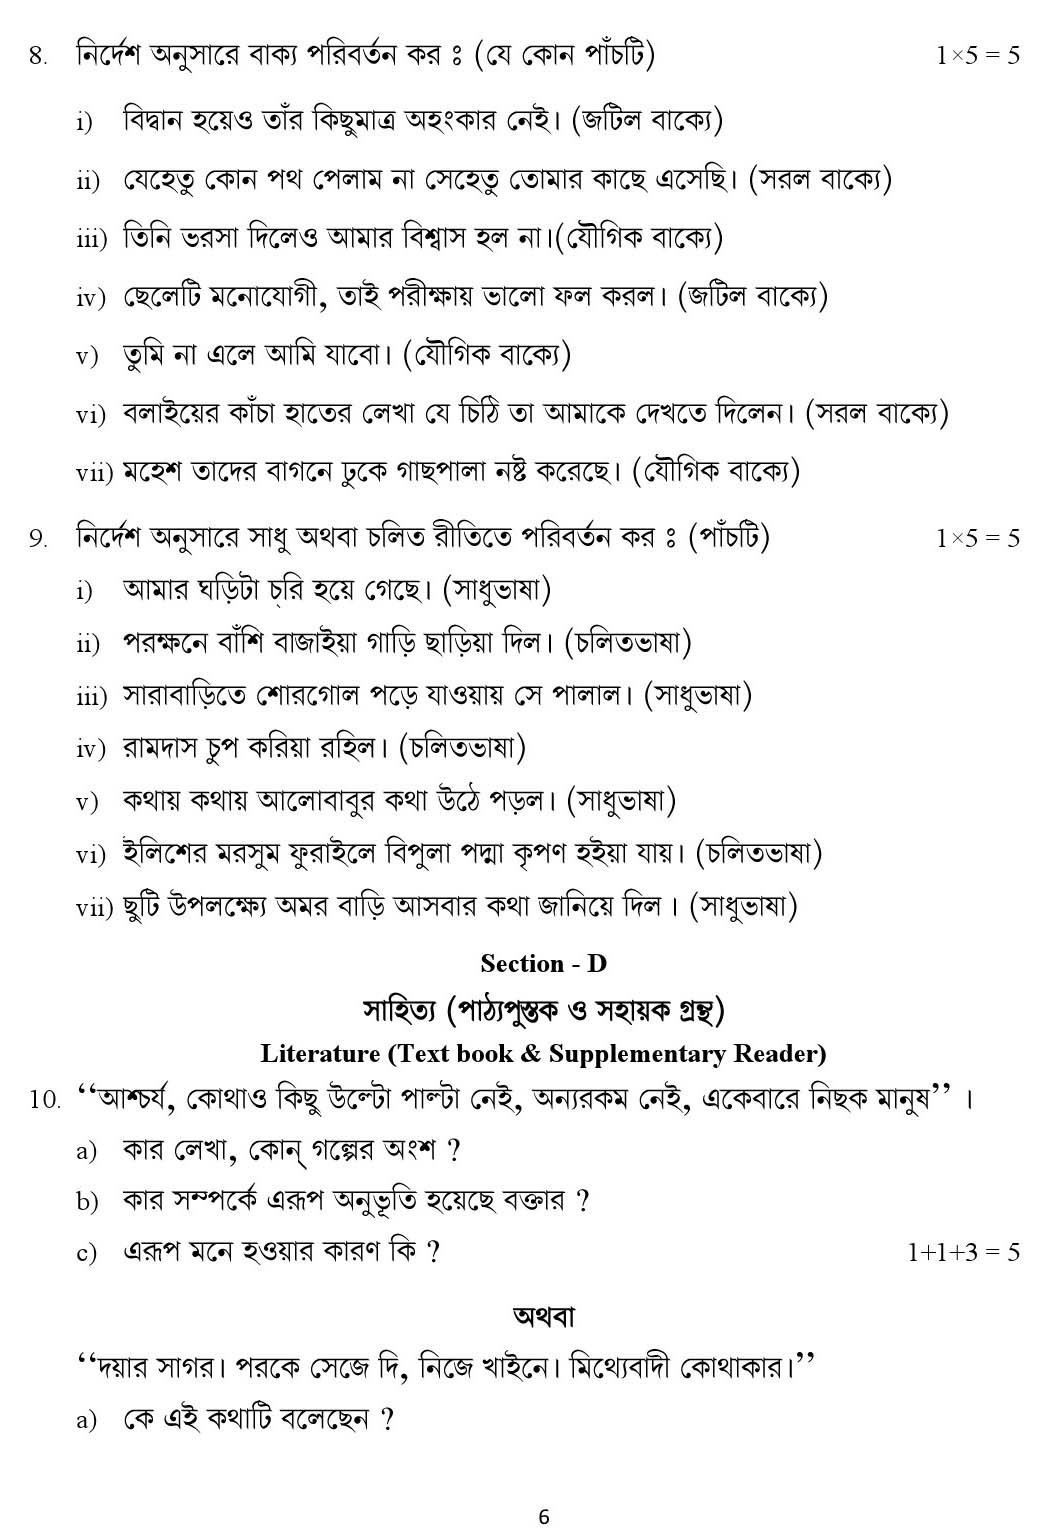 Bengali CBSE Class X Sample Question Paper 2018-19 - Image 6